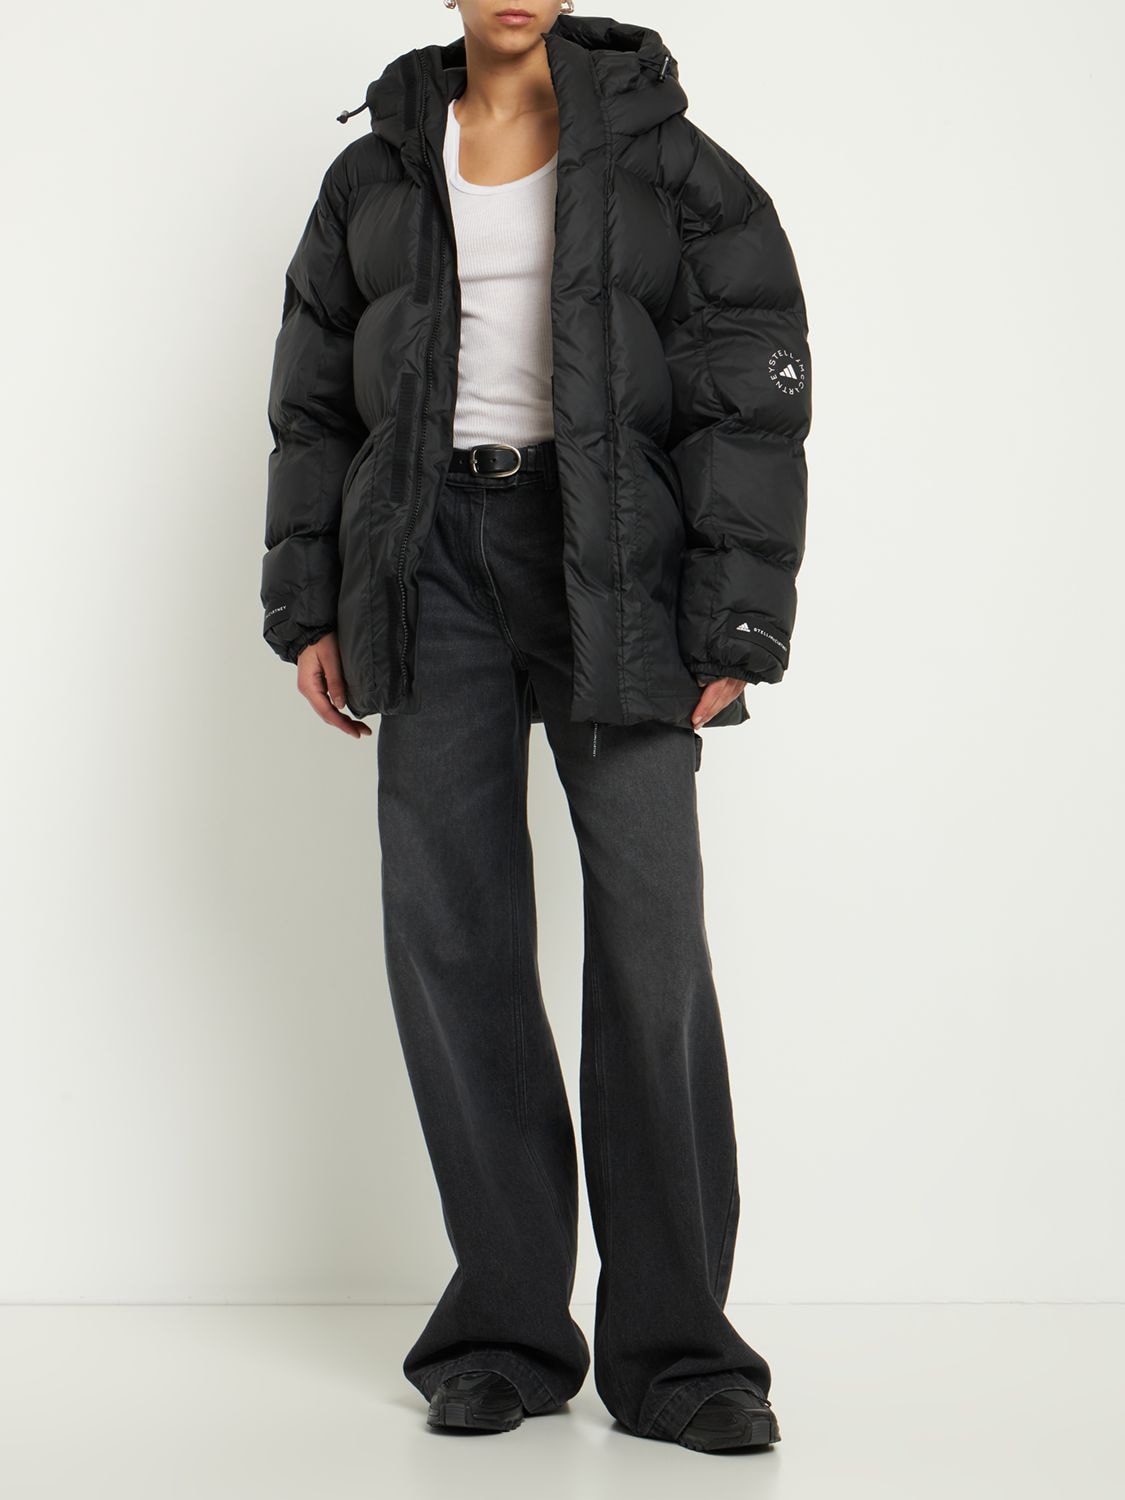 Adidas X Stella McCartney Asmc Padded Winter Jacket